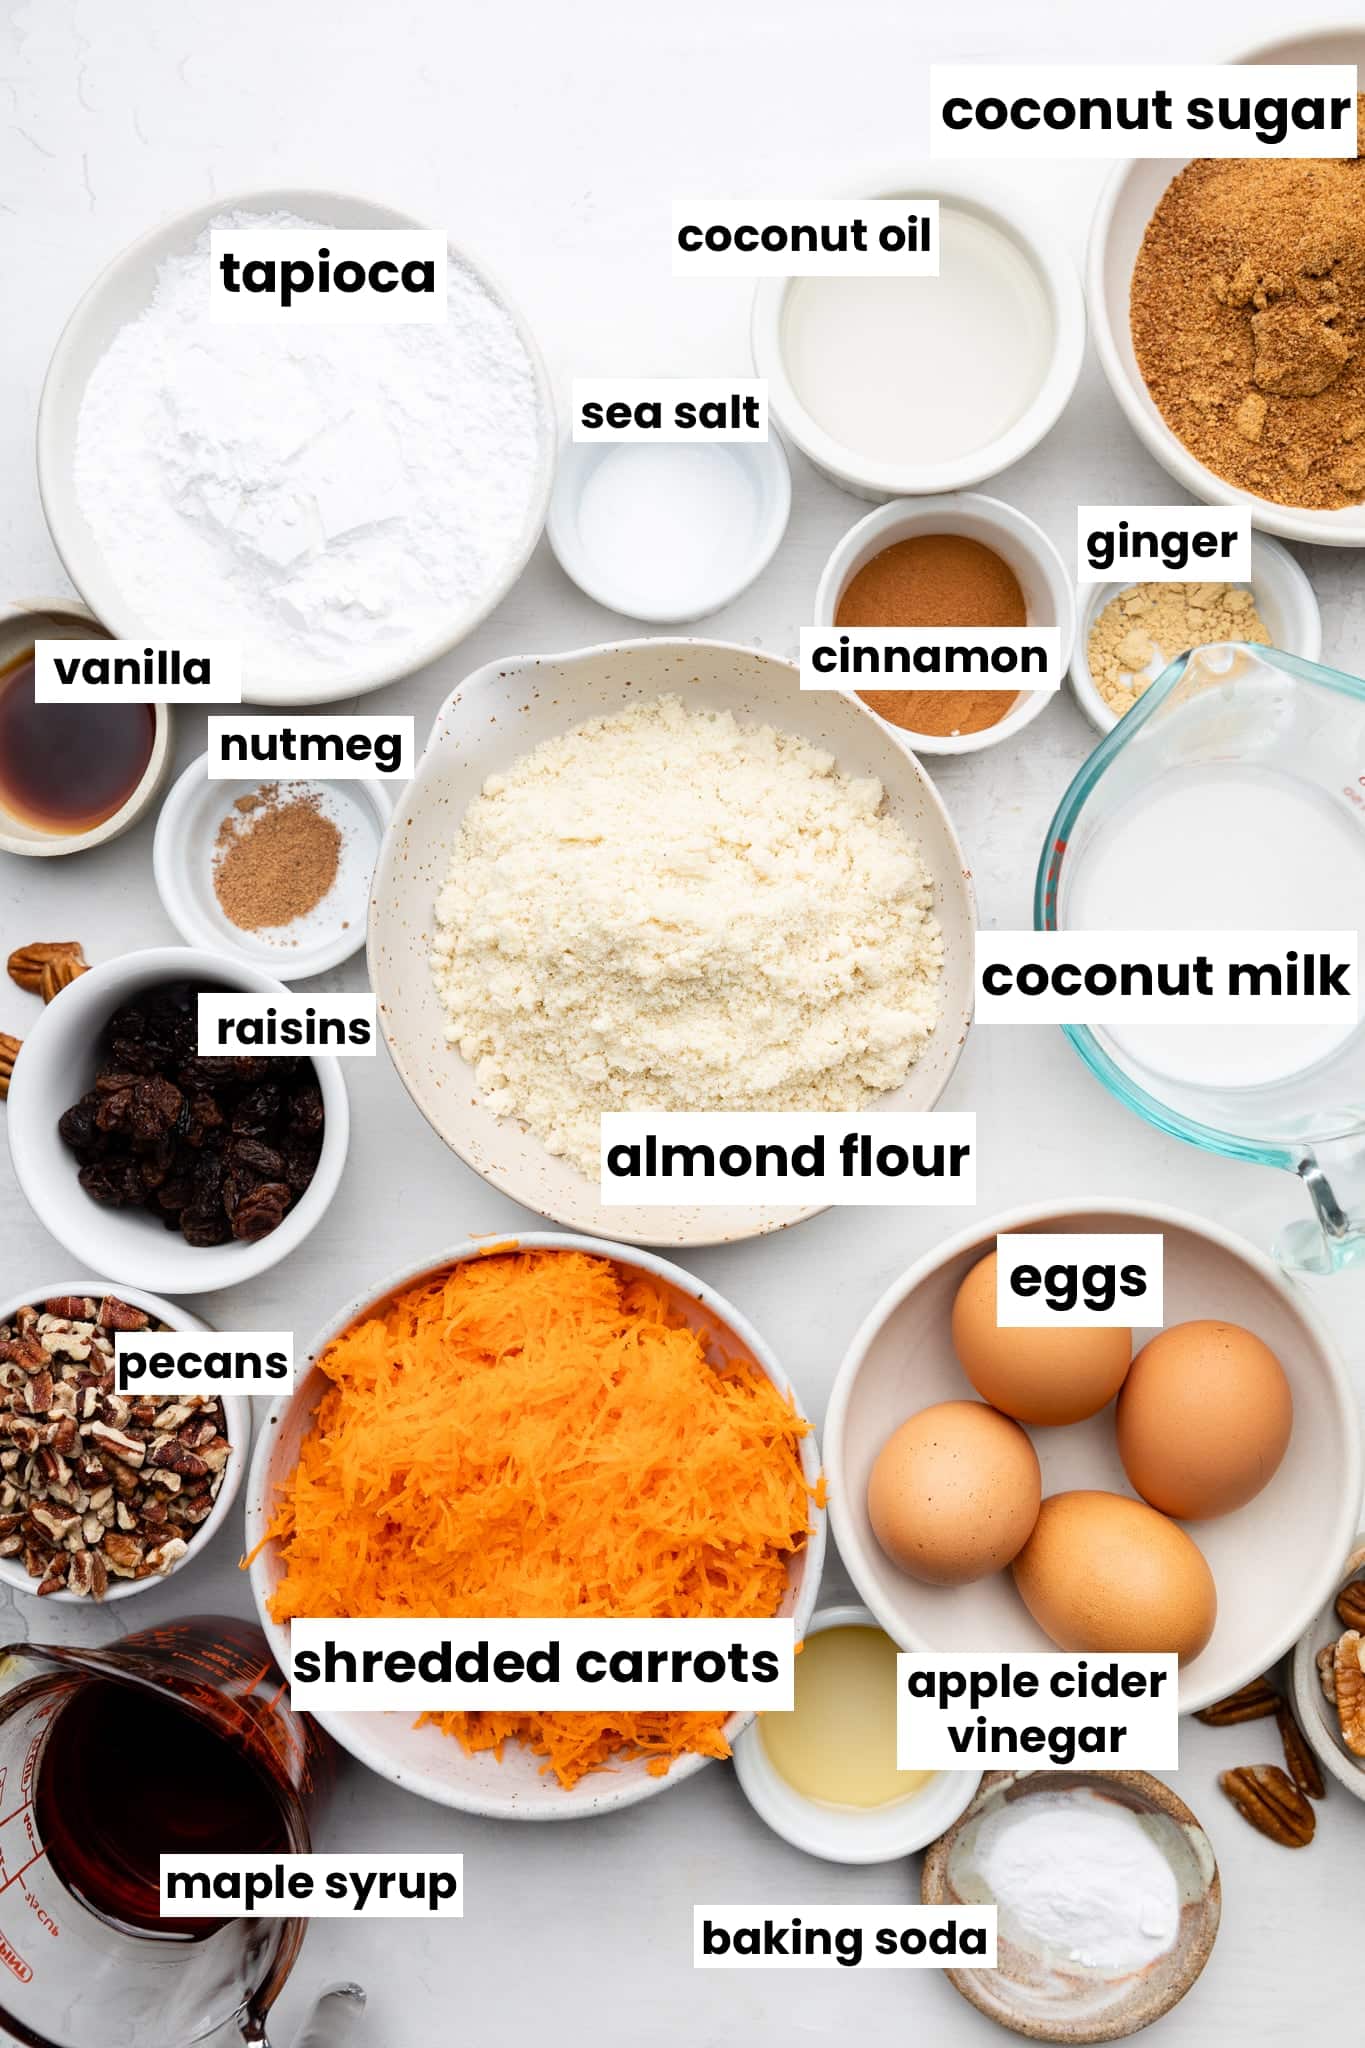 Healthy ingredients in bowls including almond flour, shredded carrots, tapioca, coconut sugar, coconut oil, ginger, cinnamon, vanilla, raisins, coconut milk, pecans, baking soda, eggs, and maple syrup.